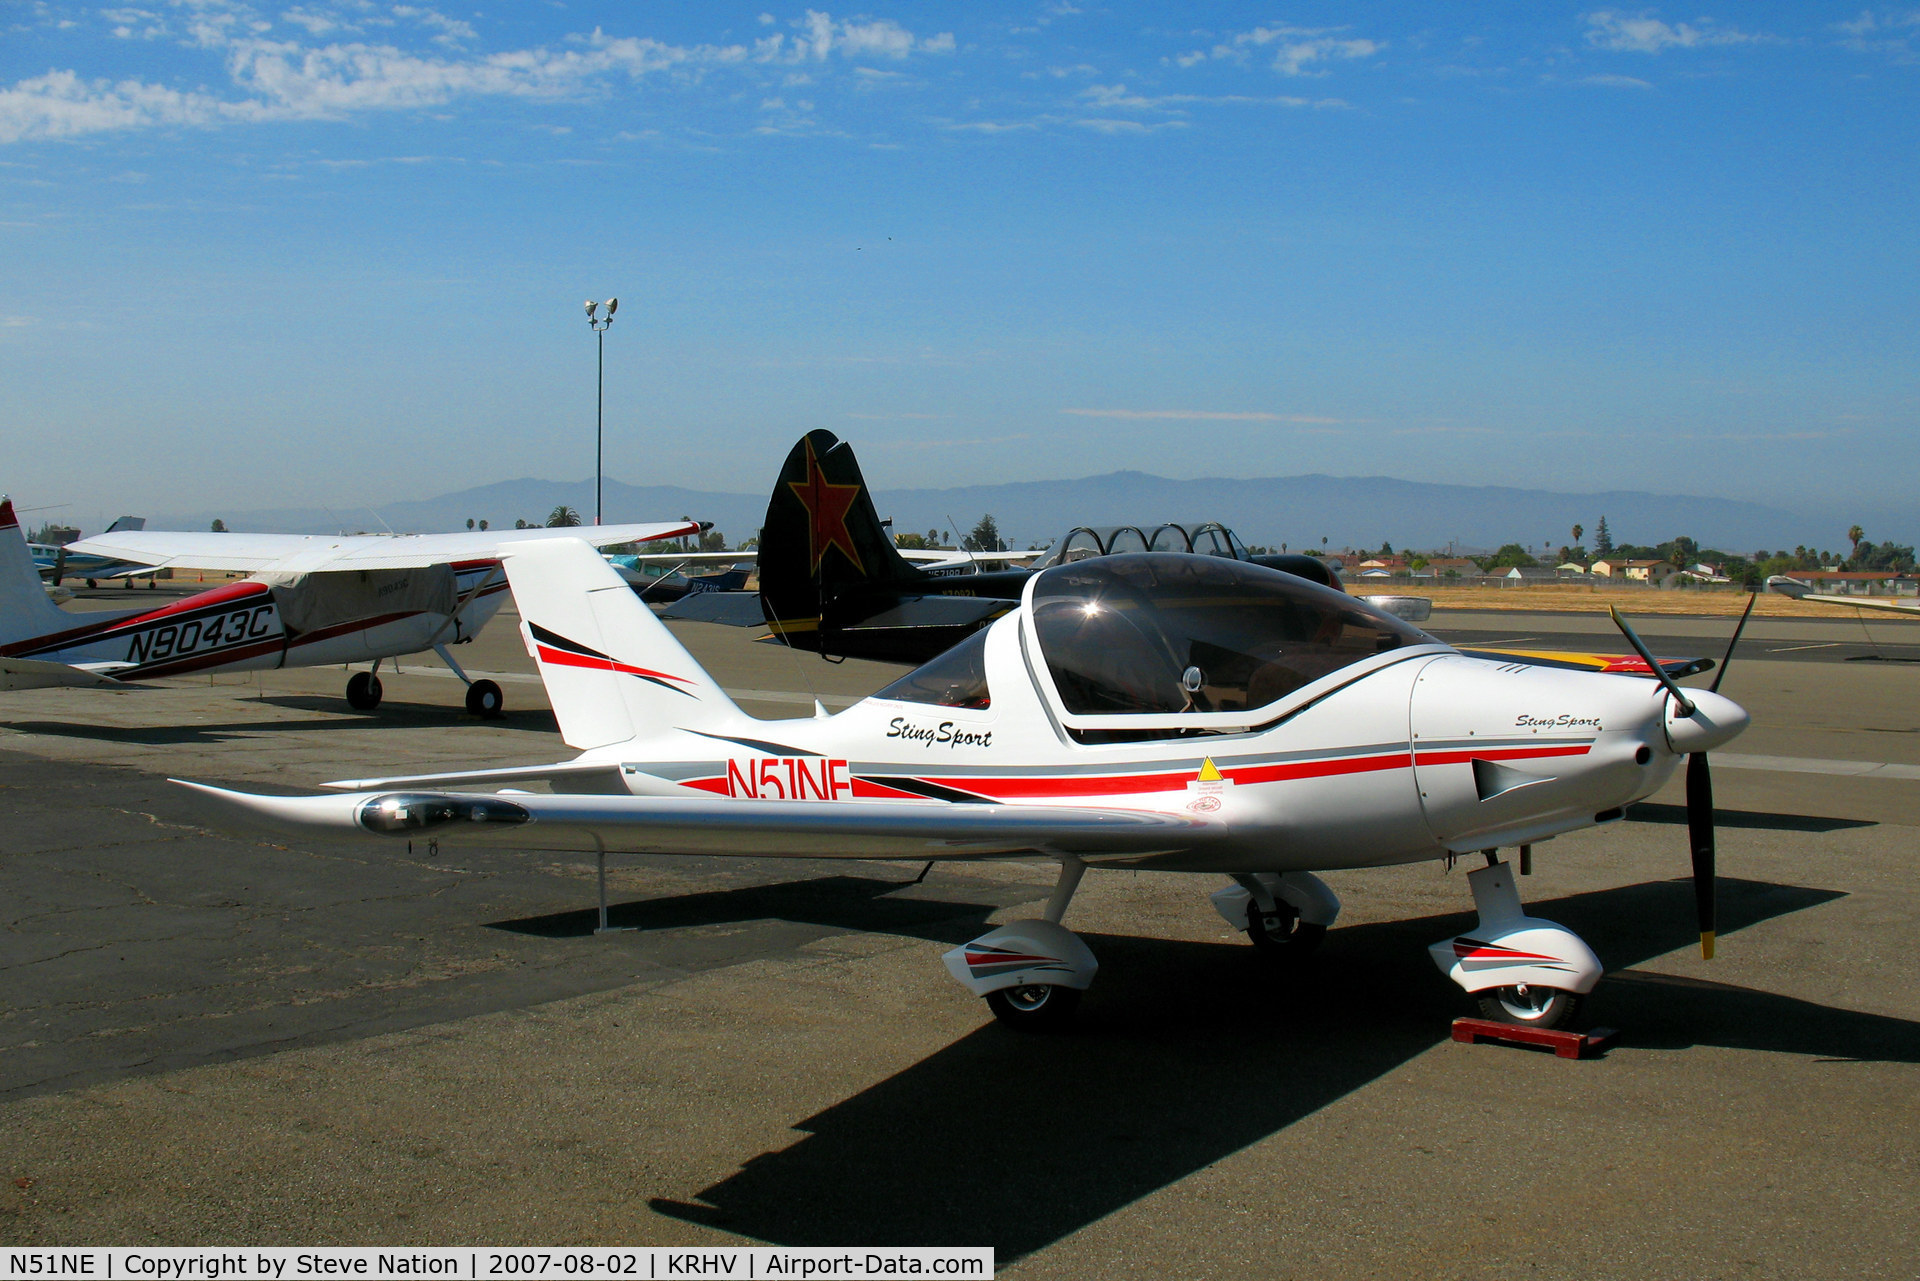 Aircraft N51ne (2007 Tl Ultralight Tl-2000 Sting Sport C/N Tlusa154) Photo  By Steve Nation (Photo Id: Ac509226)